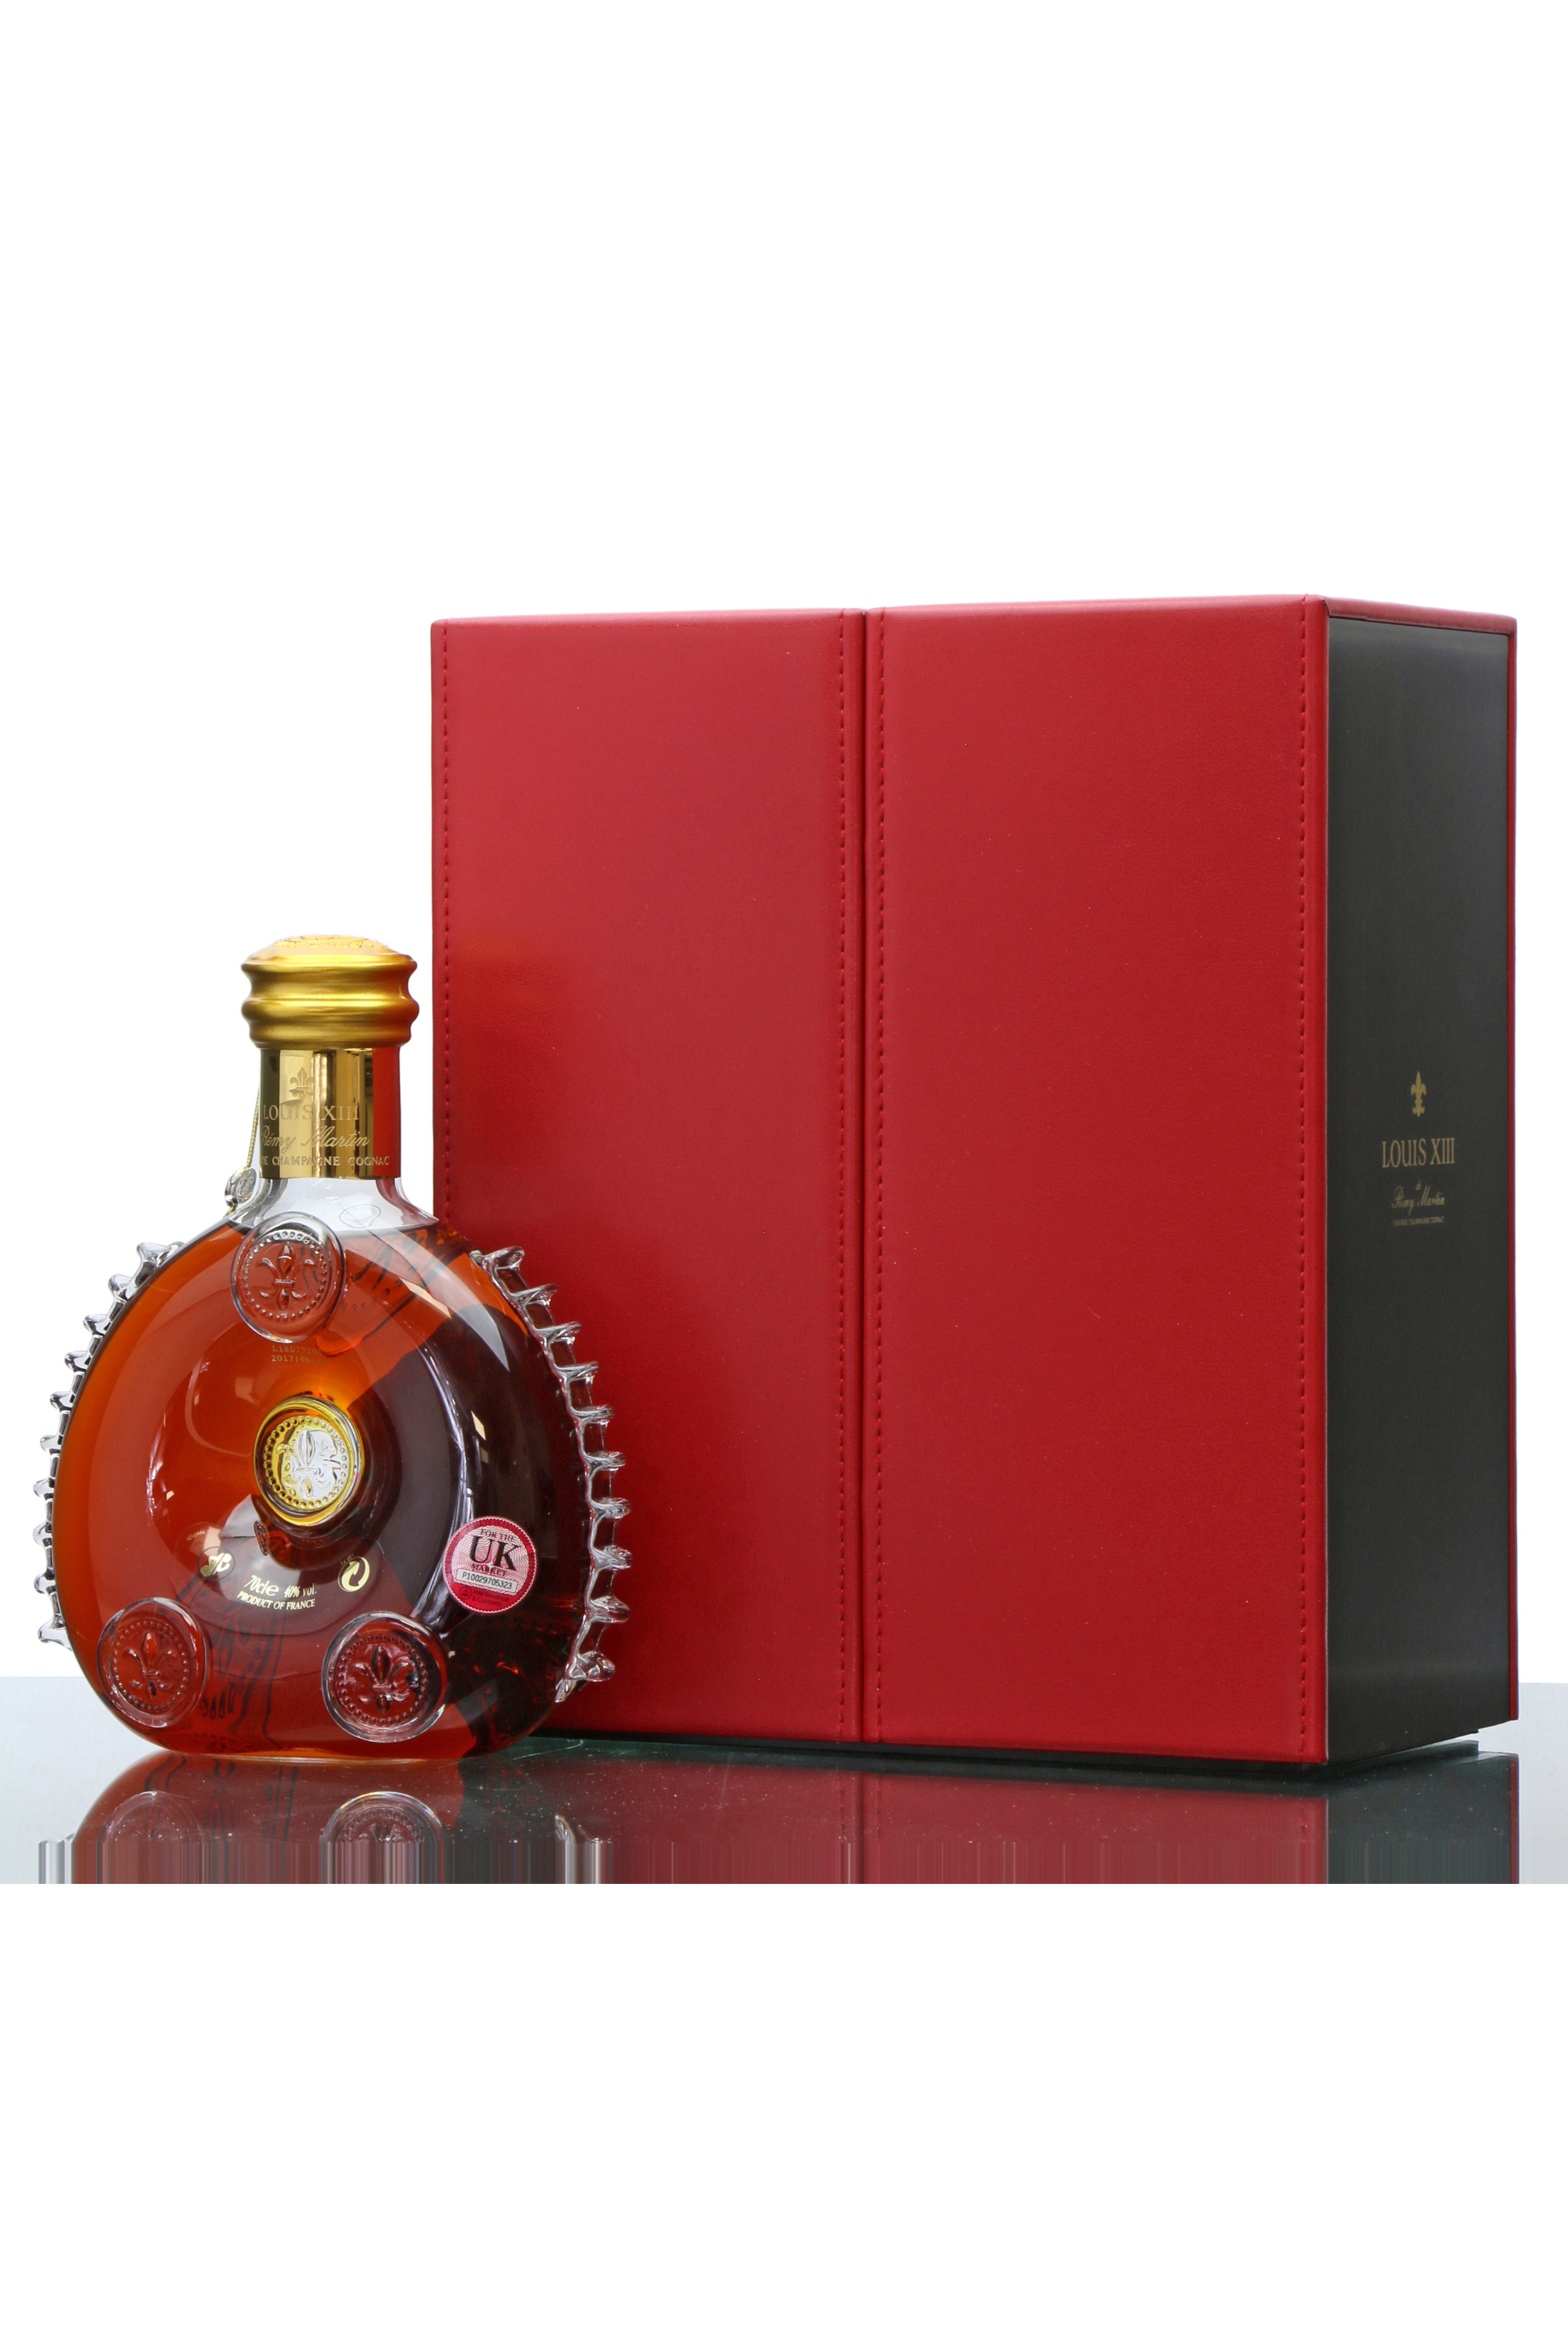 Rémy Martin. Louis XIII. Grande Champagne Cognac. Baccarat crystal